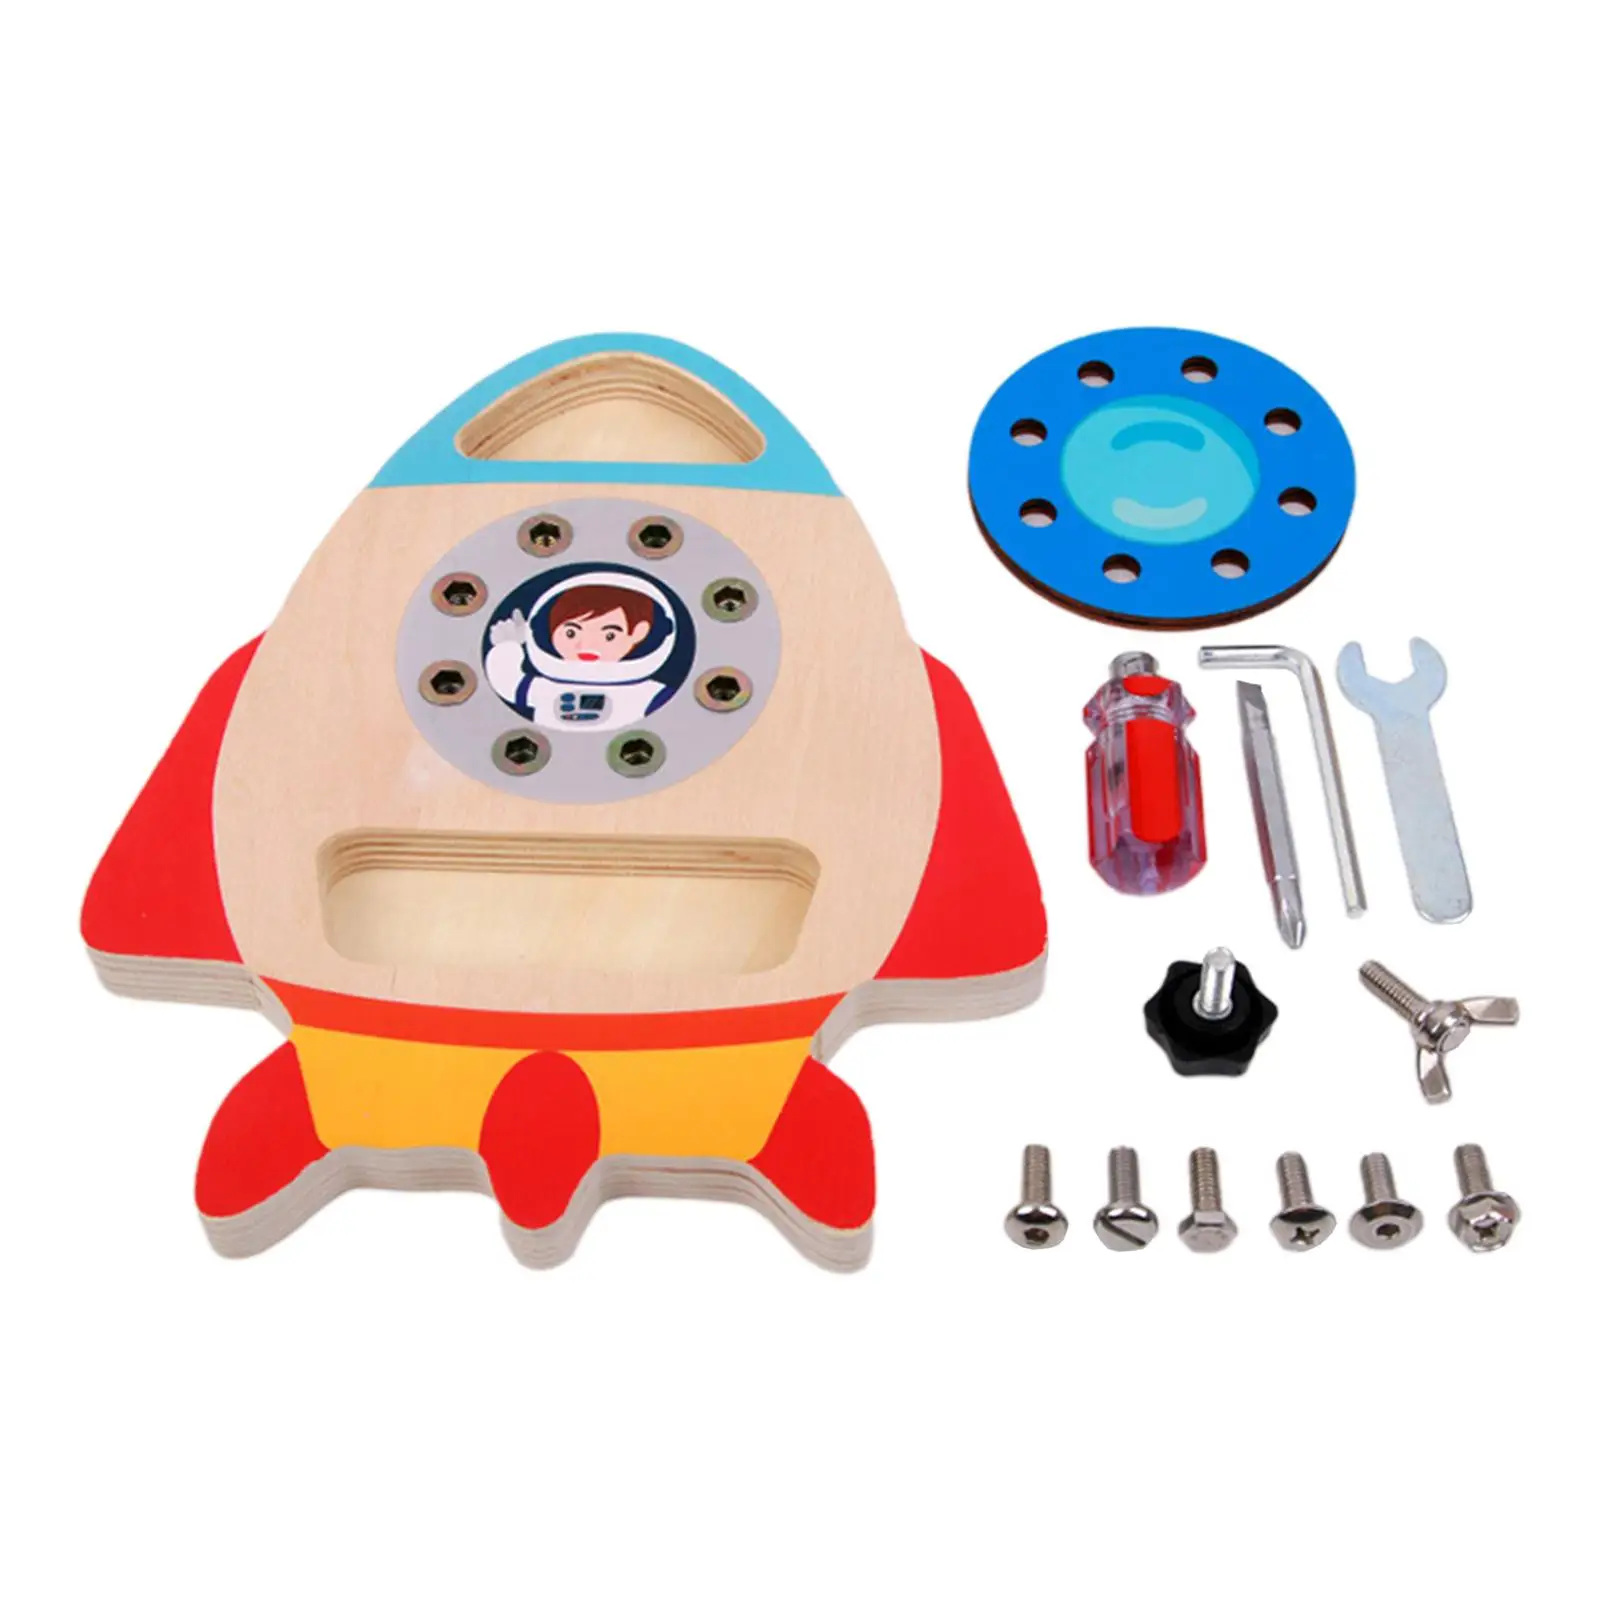 Rocket Shaped Screwdriver Board Set Early Leaning Education Toy Screw Building Set Develop Fine Motor Skills for Children Boy